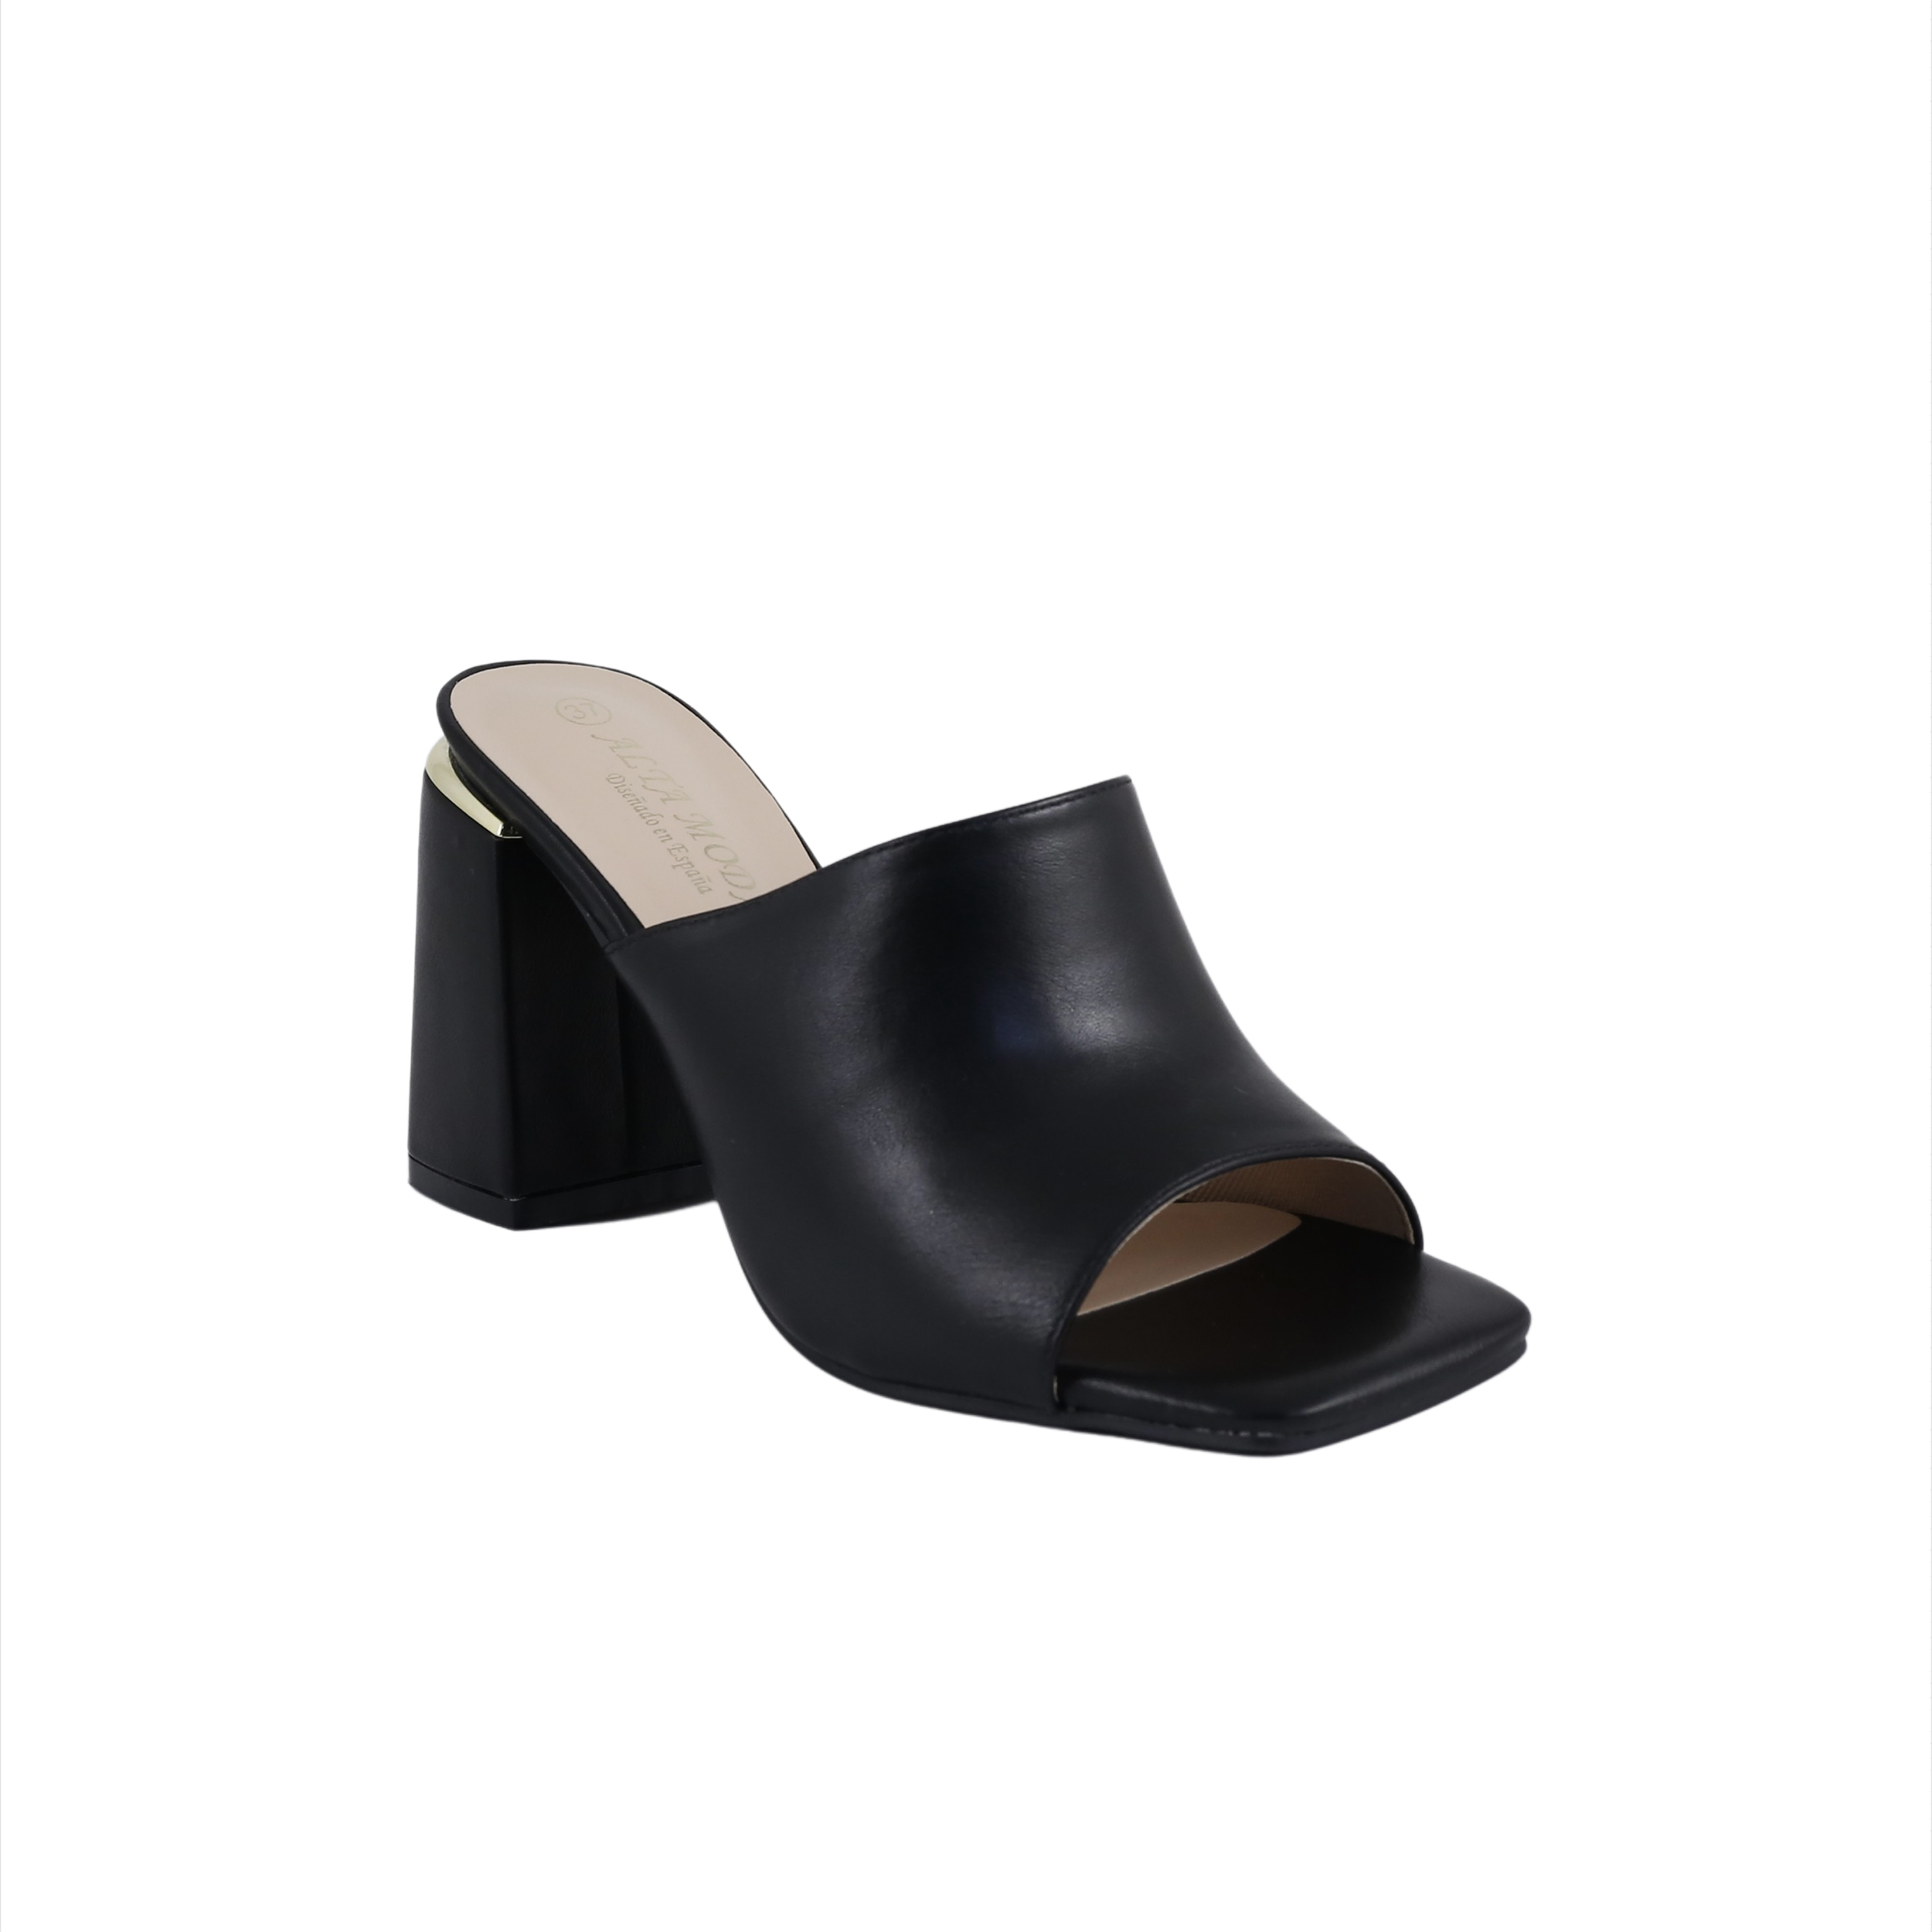 Woman Shoes Moccasins - Mules Black square toe mules